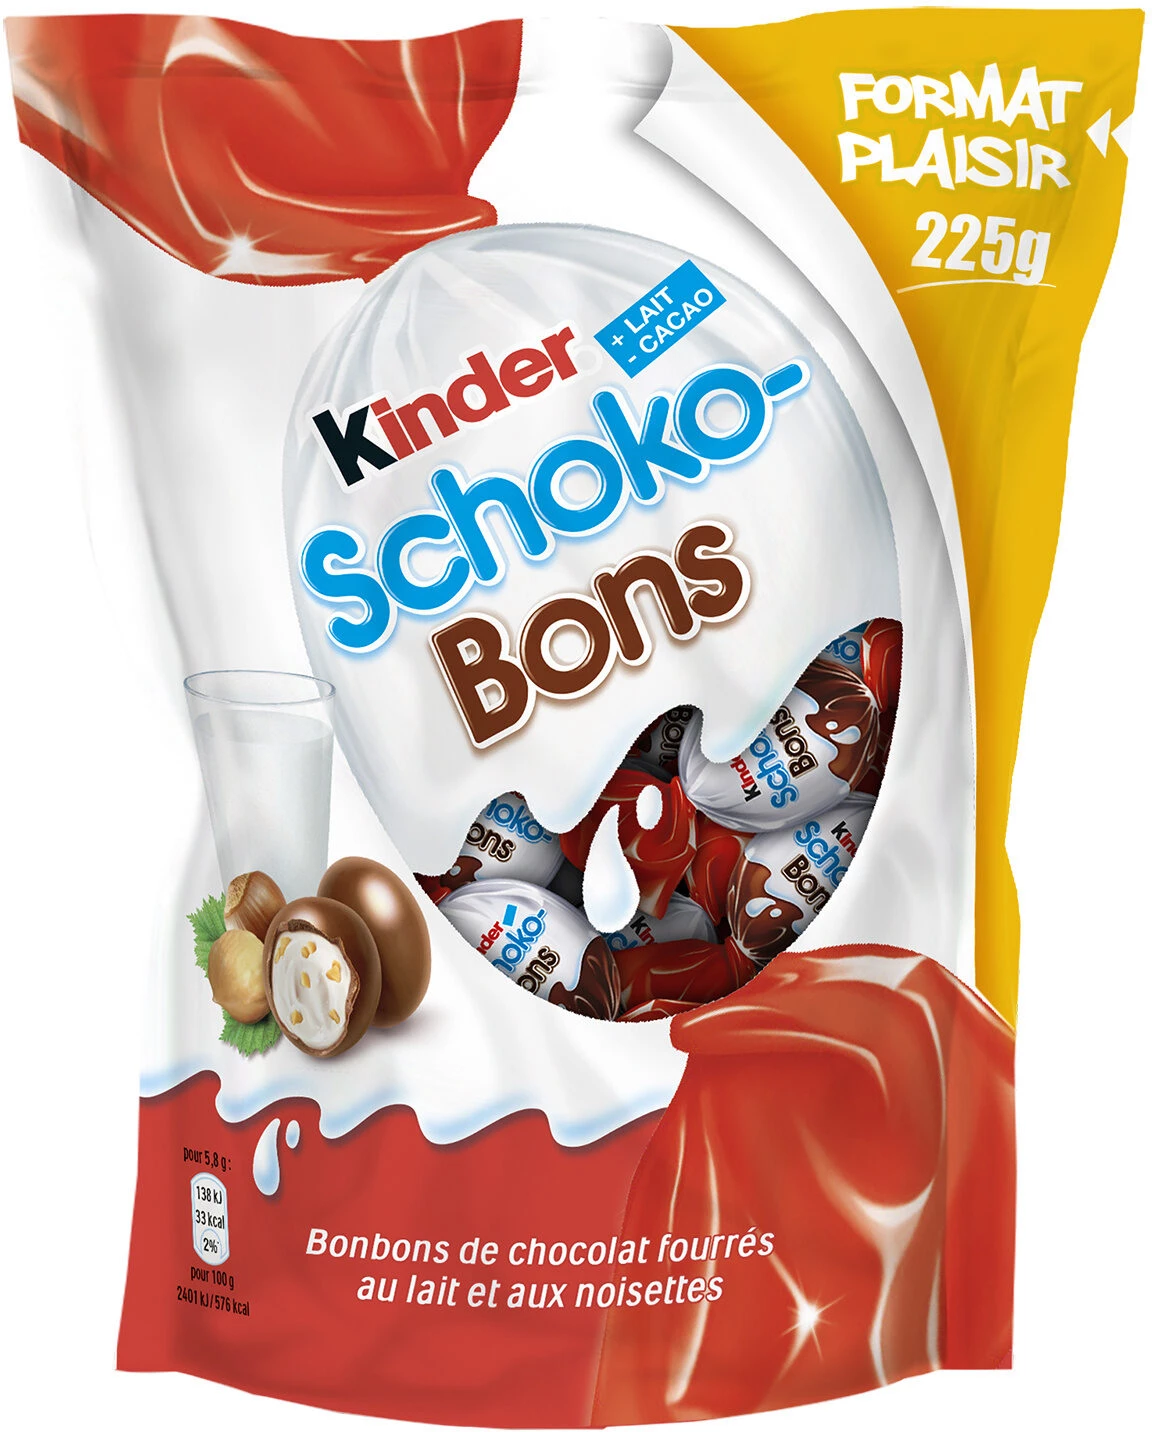 Schoko-bons 225g - KINDER